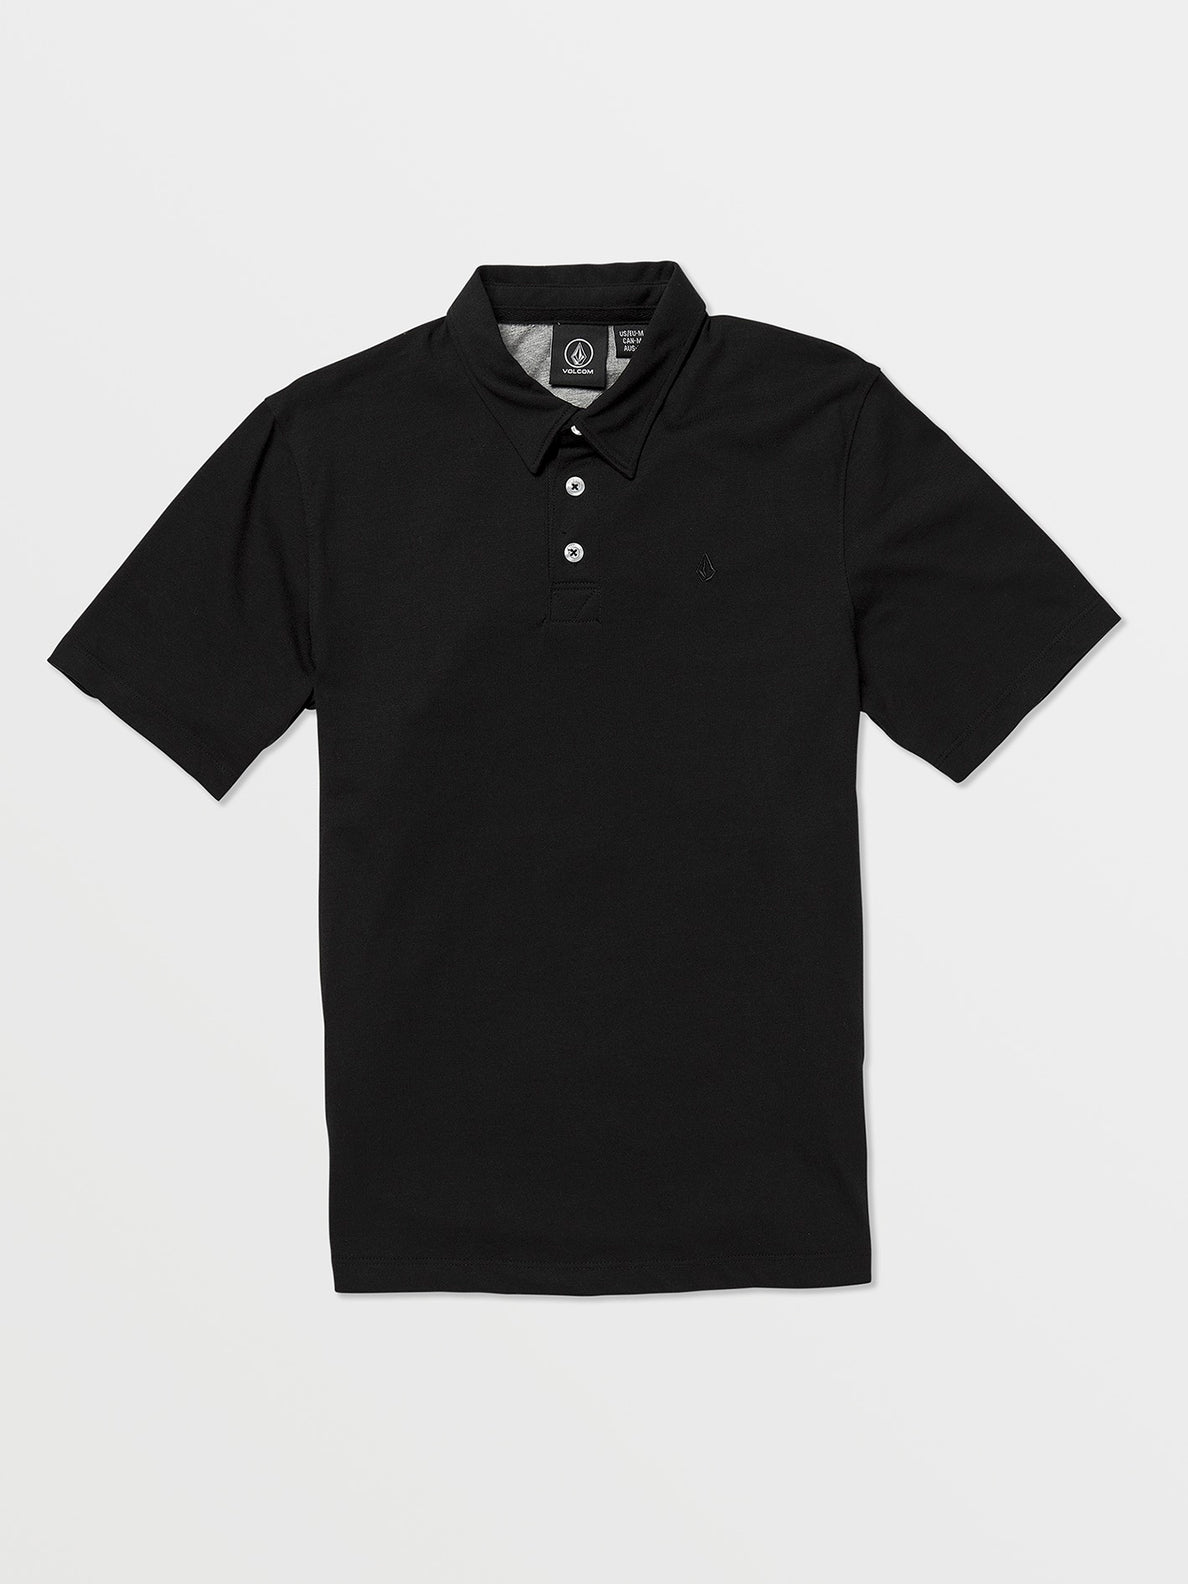 Big Youth Wowzer Polo Short Sleeve Shirt - Black